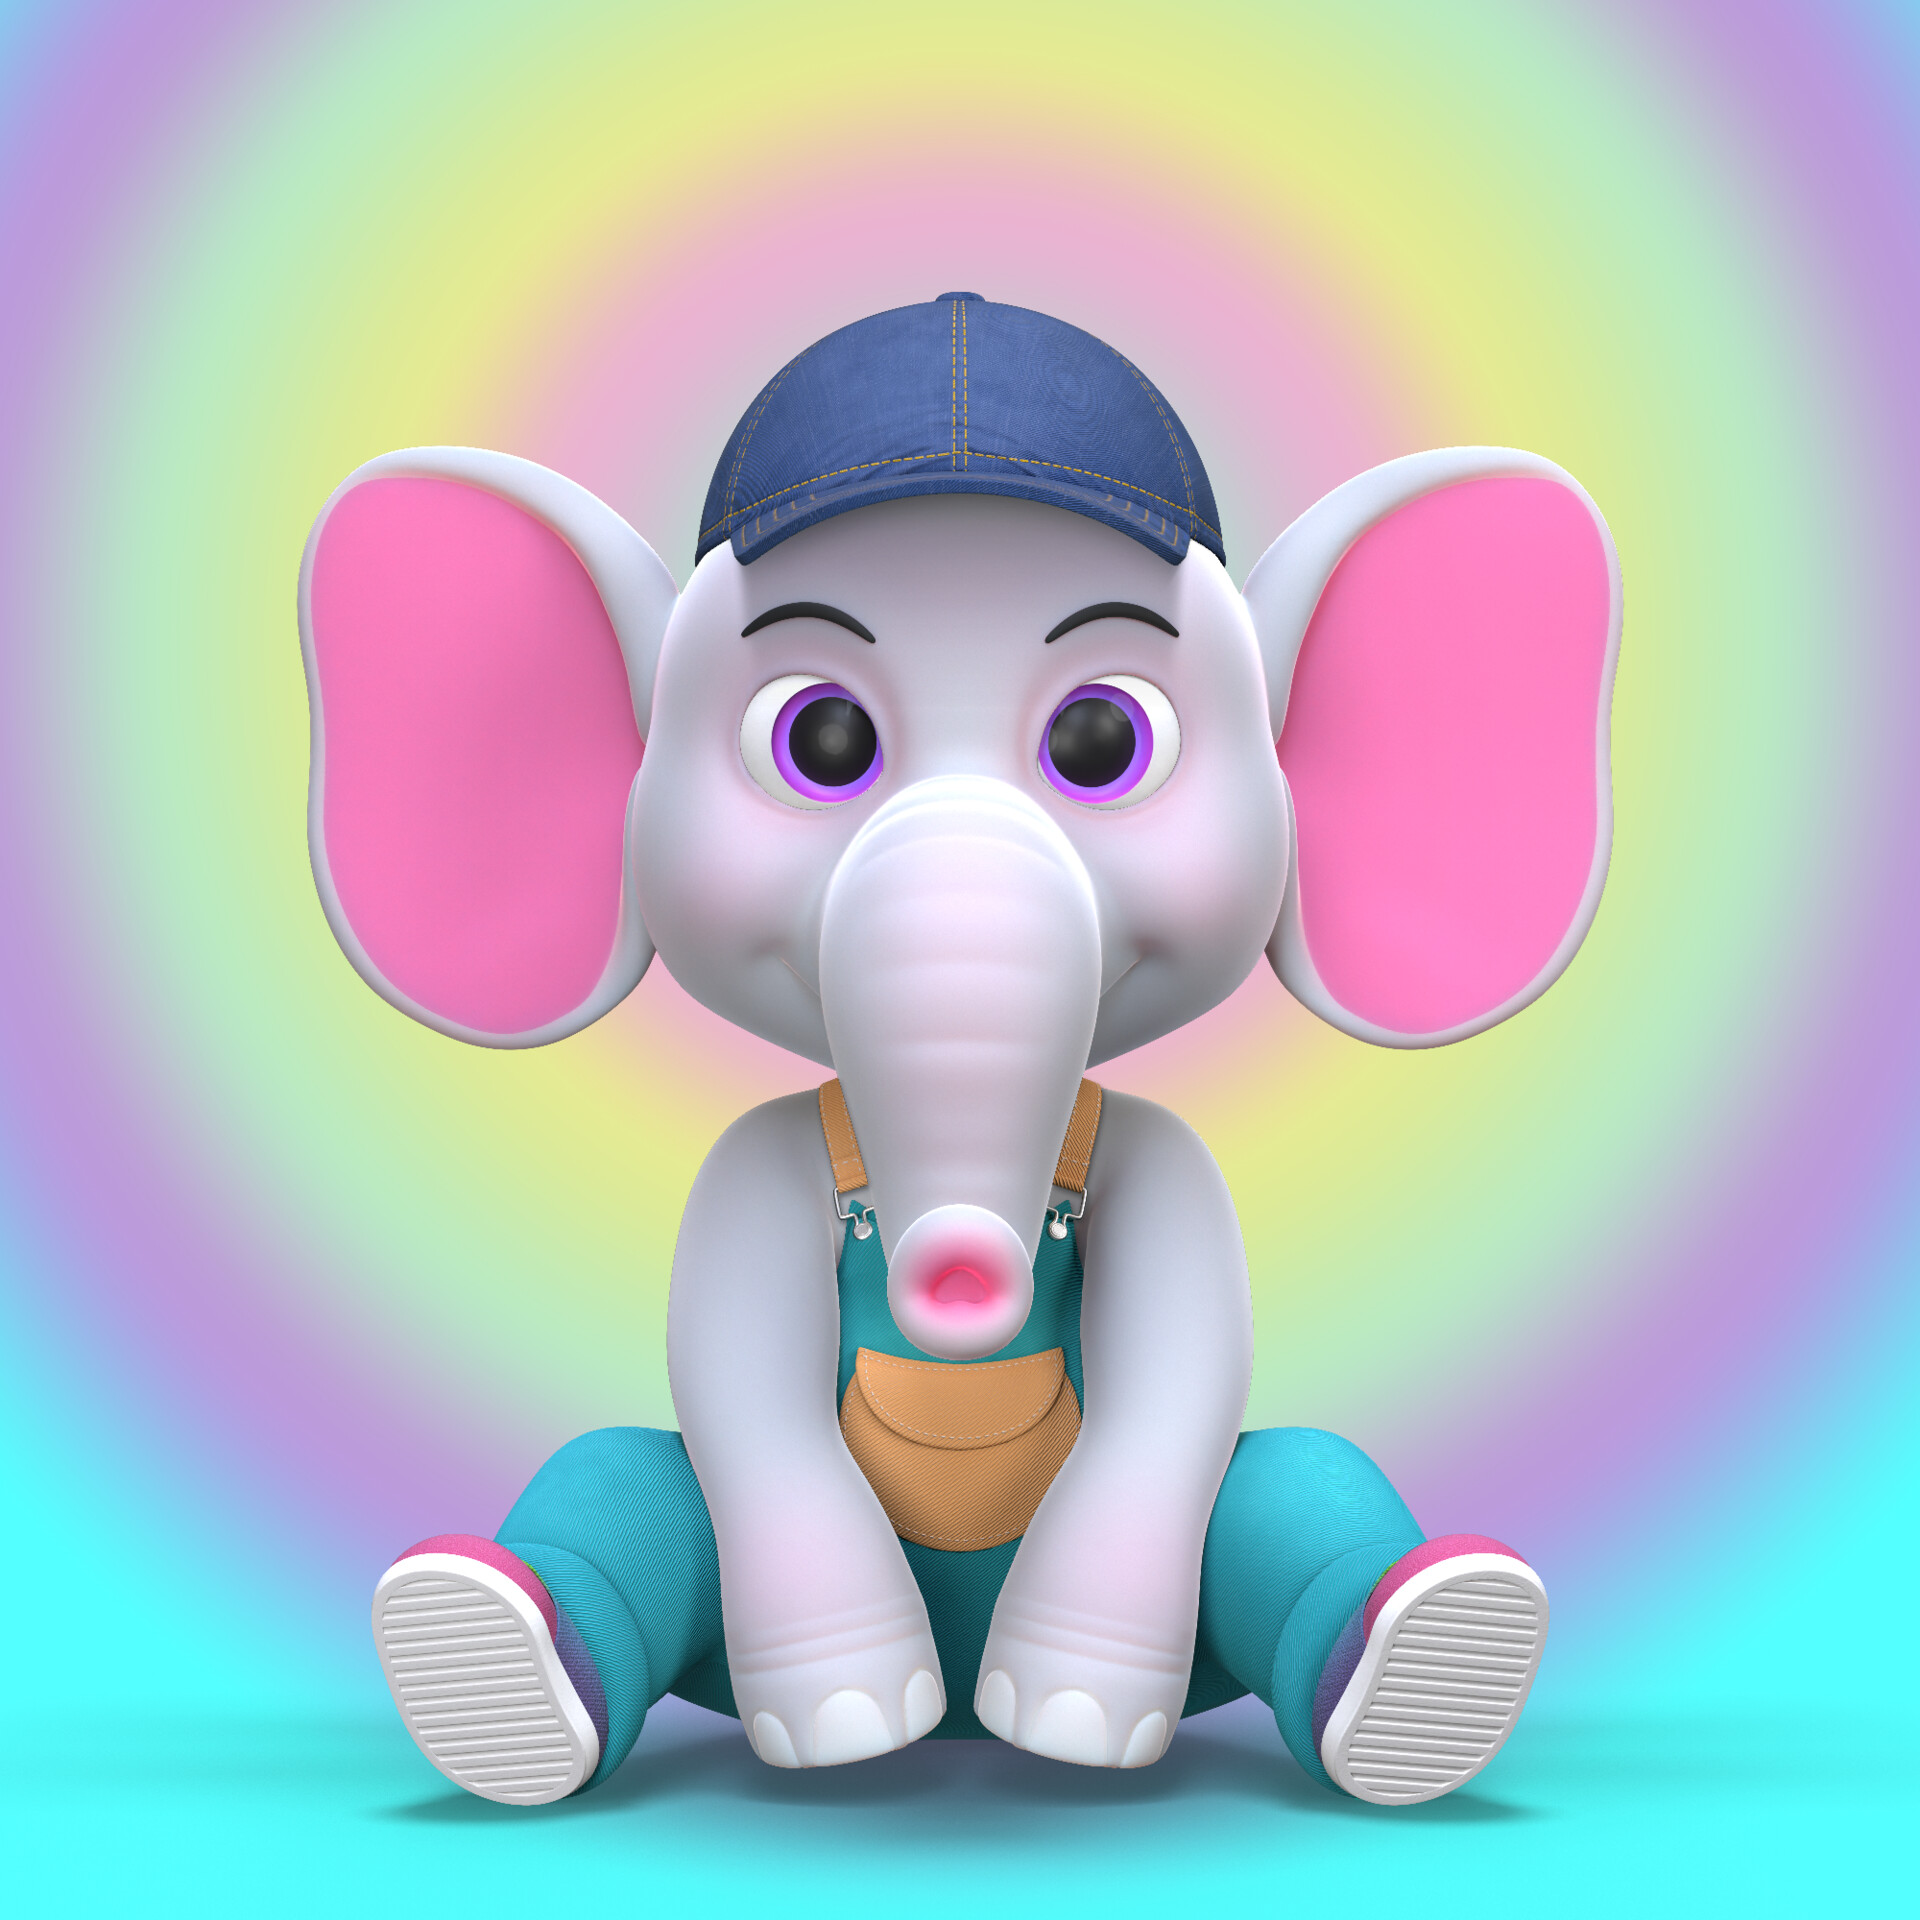 ArtStation - 3d Cute Elephant Baby #3355